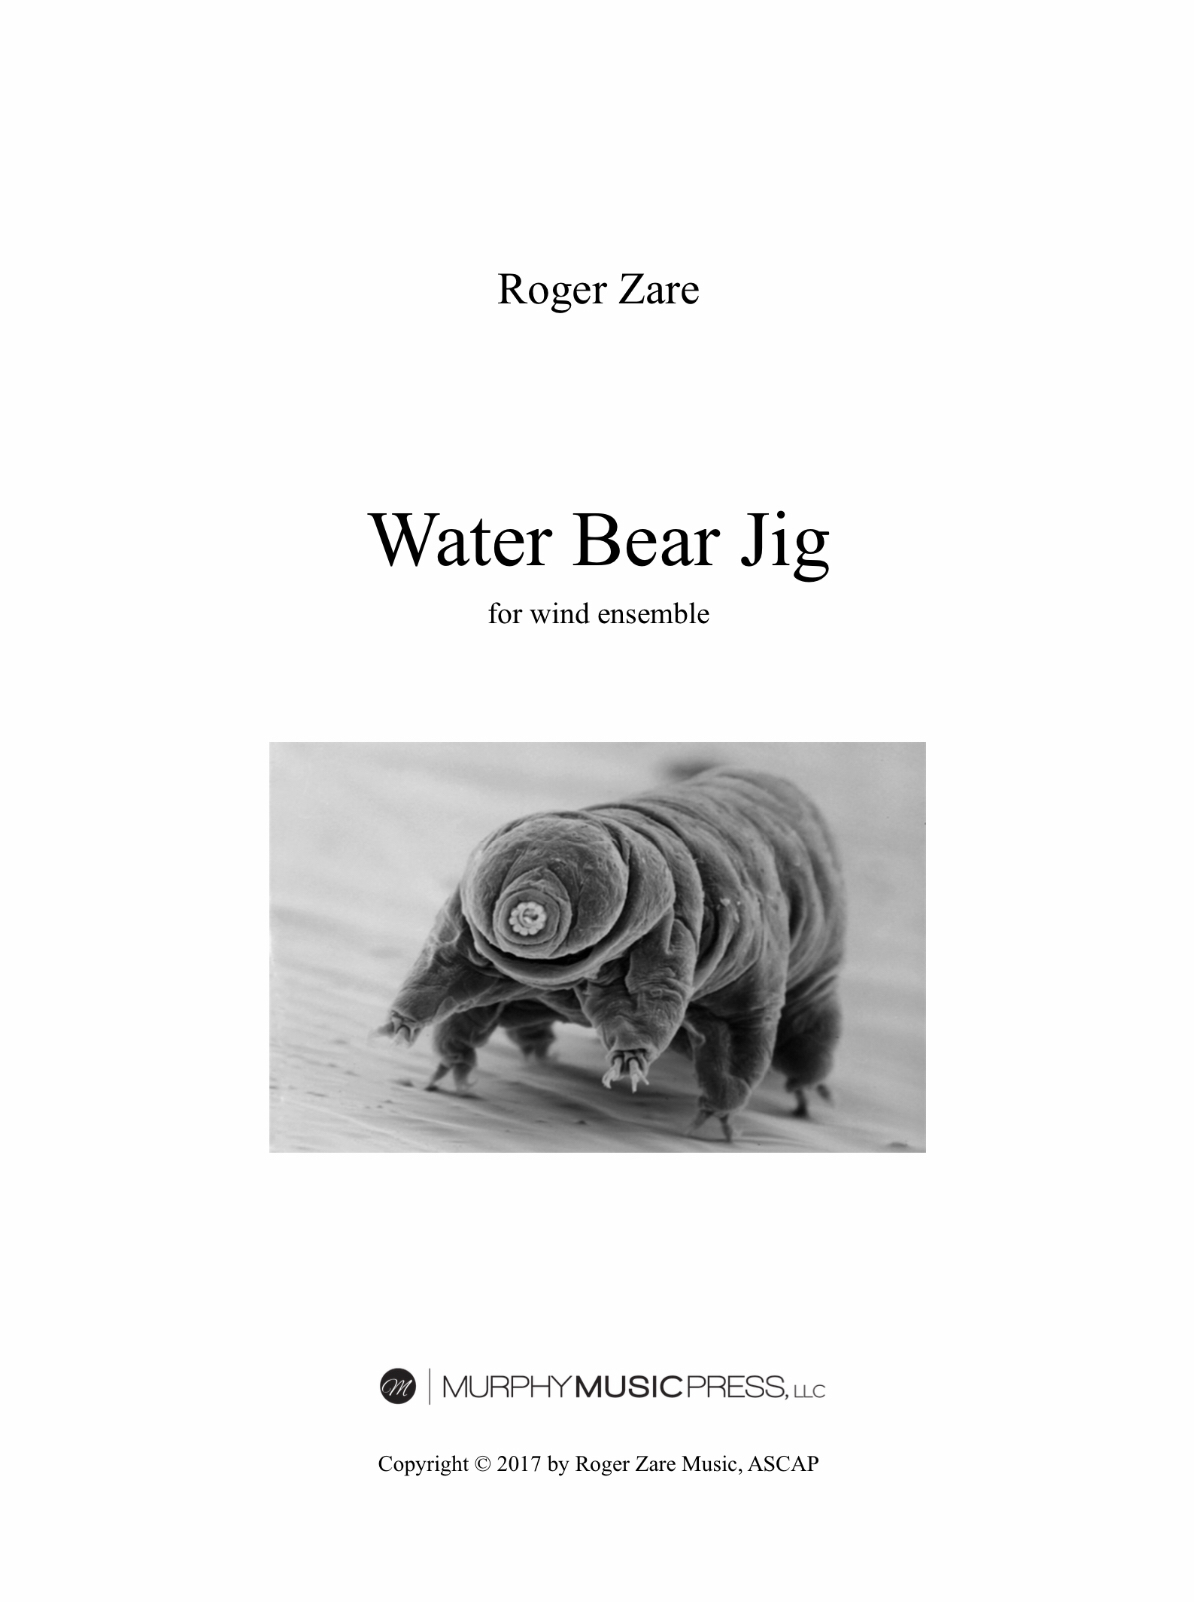 Water Bear Jig by Roger Zare